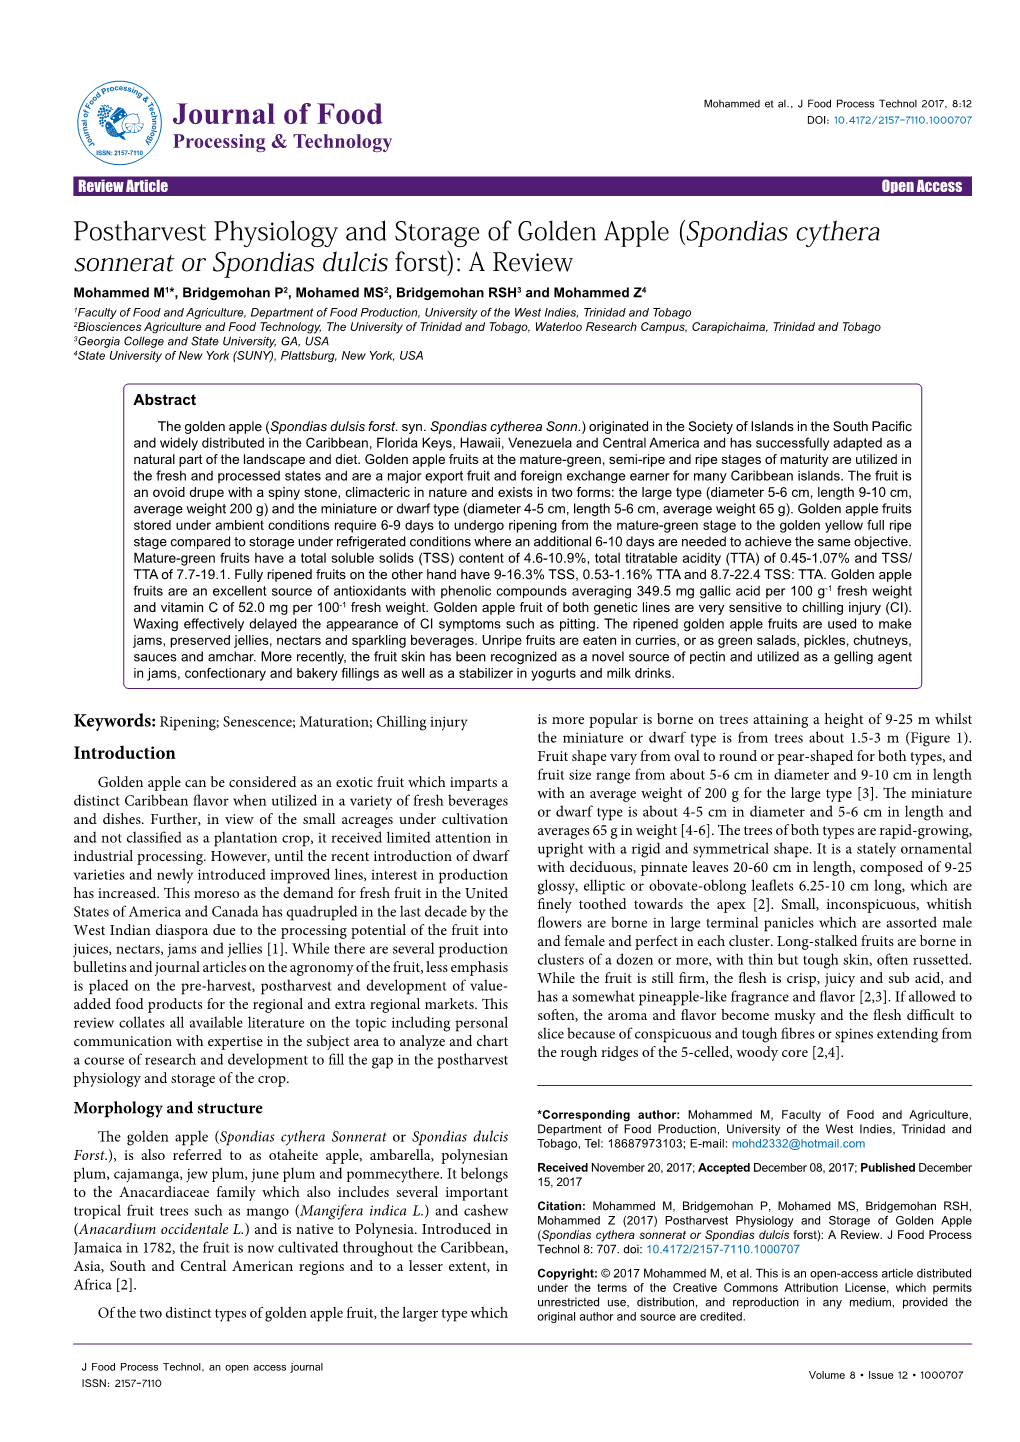 Postharvest Physiology and Storage of Golden Apple (Spondias Cythera